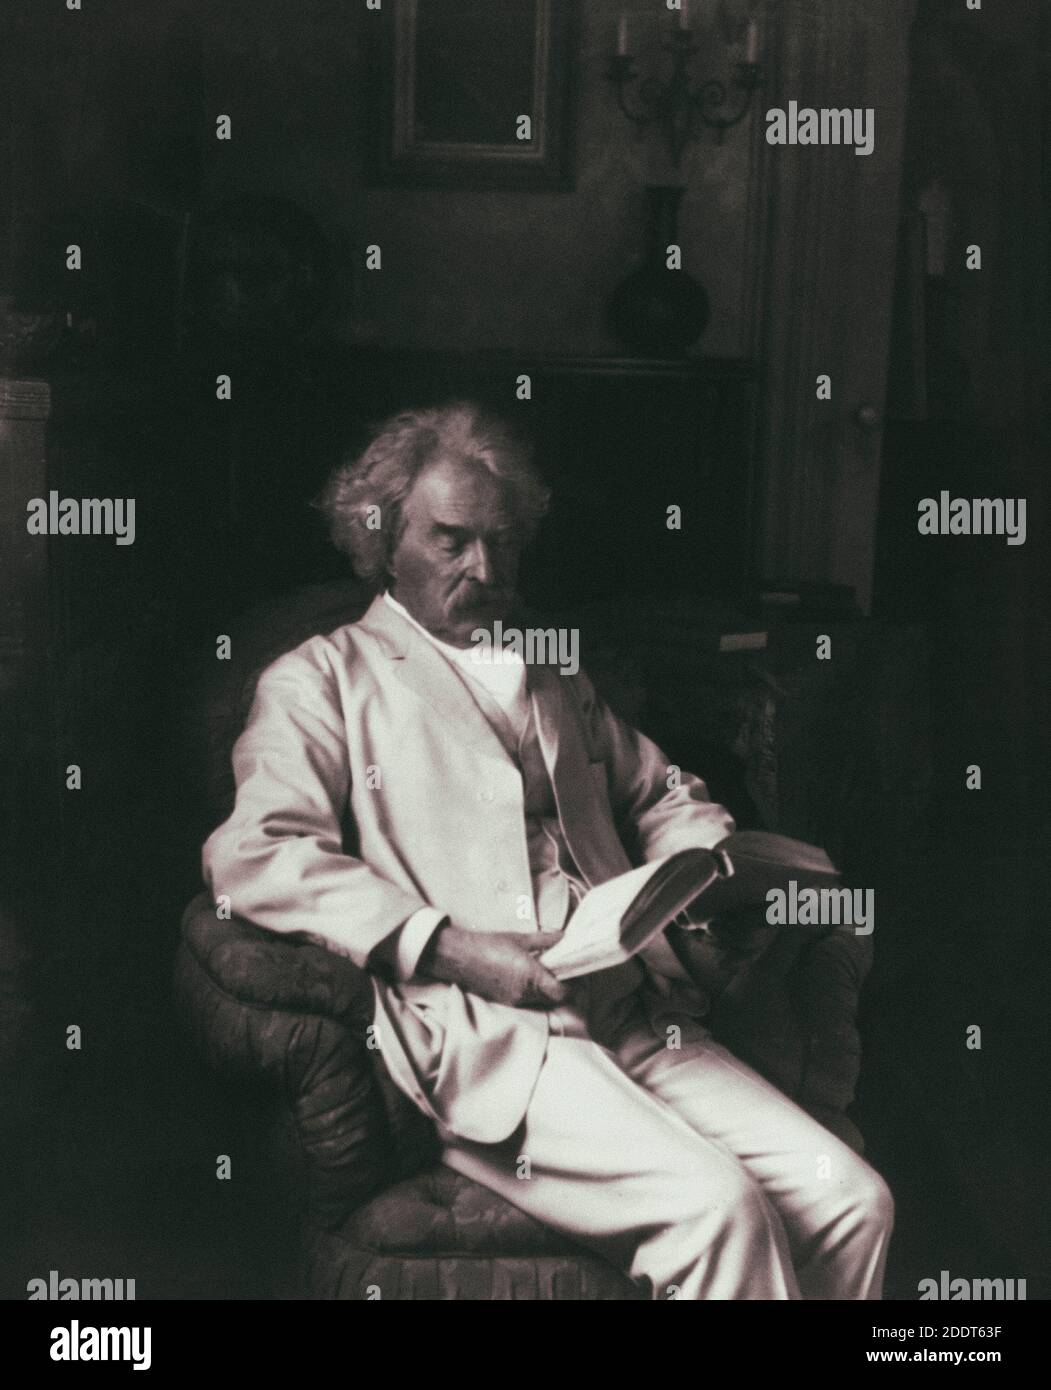 Retro photo of Mark Twain Samuel Langhorne Clemens (1835 – 1910), known by his pen name Mark Twain, was an American writer, humorist, entrepreneur, pu Stock Photo